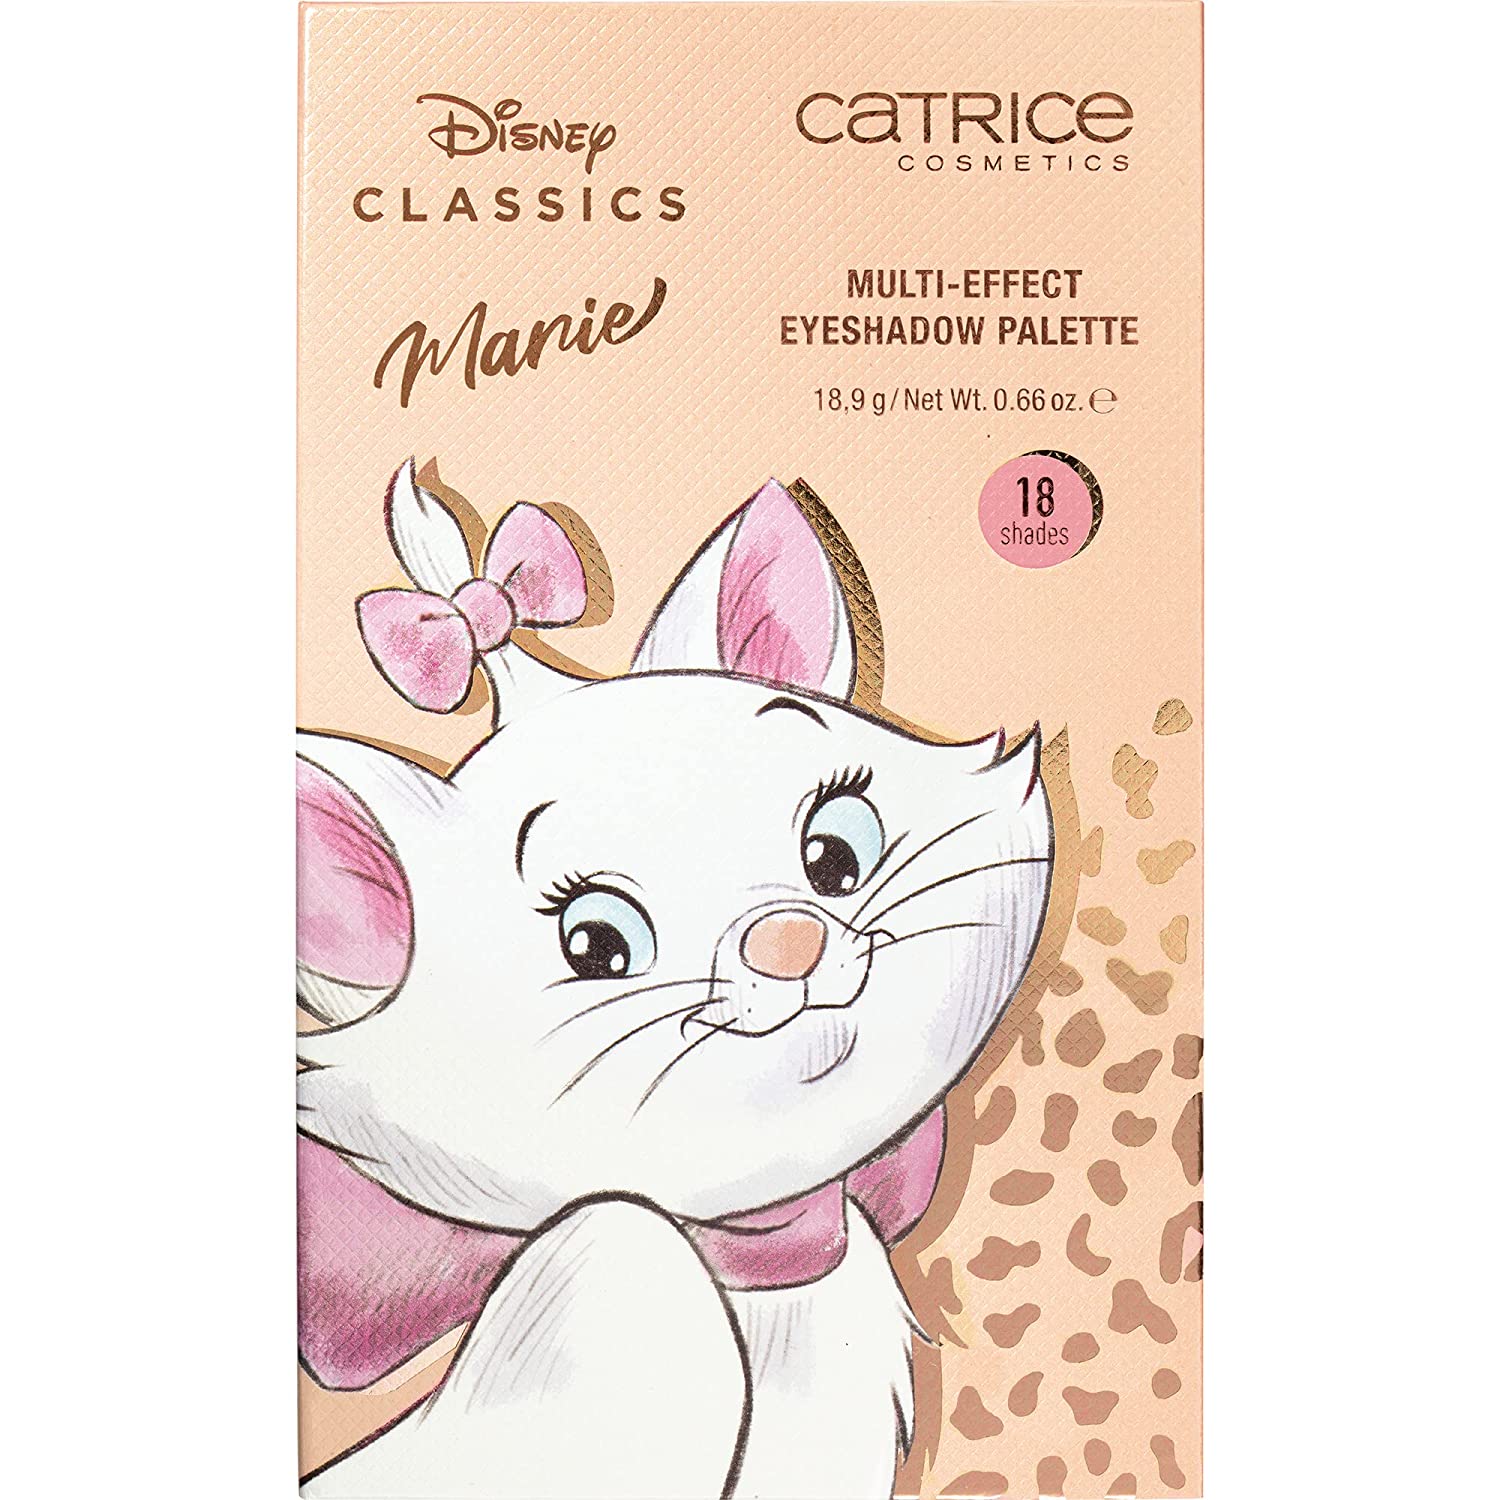 Catrice Disney Classics Marie Multi-Effect Eyeshadow Palette, No. 010 Je Su, ‎010 suis